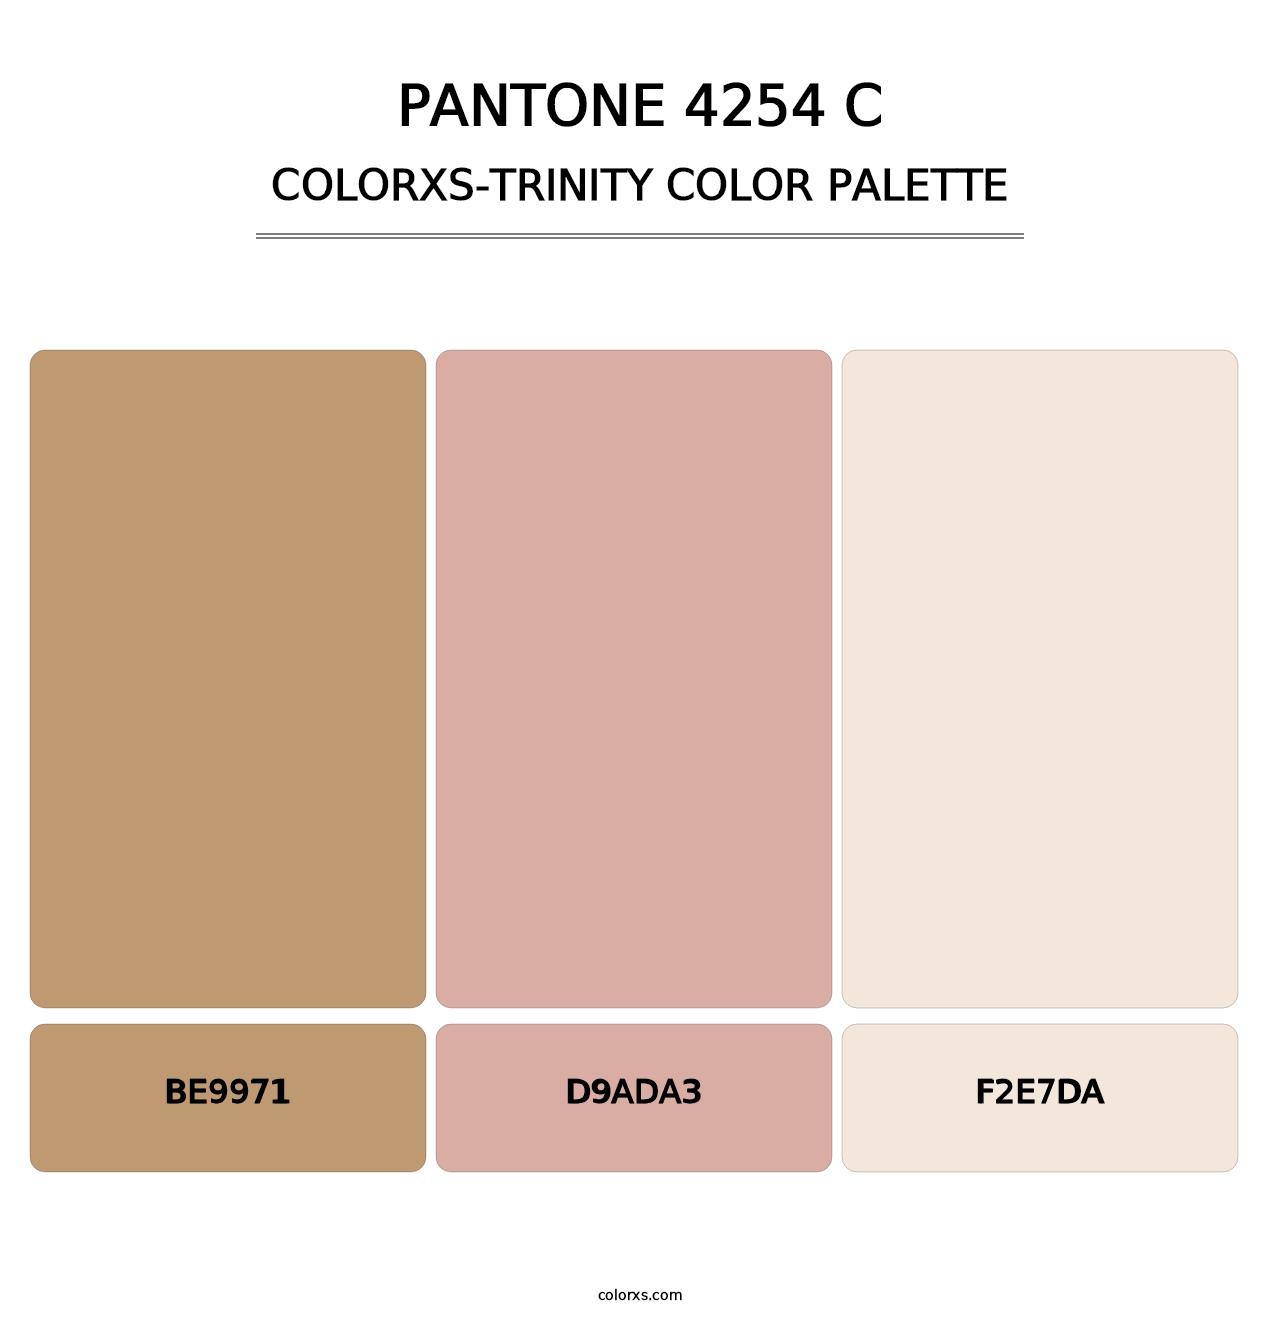 PANTONE 4254 C - Colorxs Trinity Palette